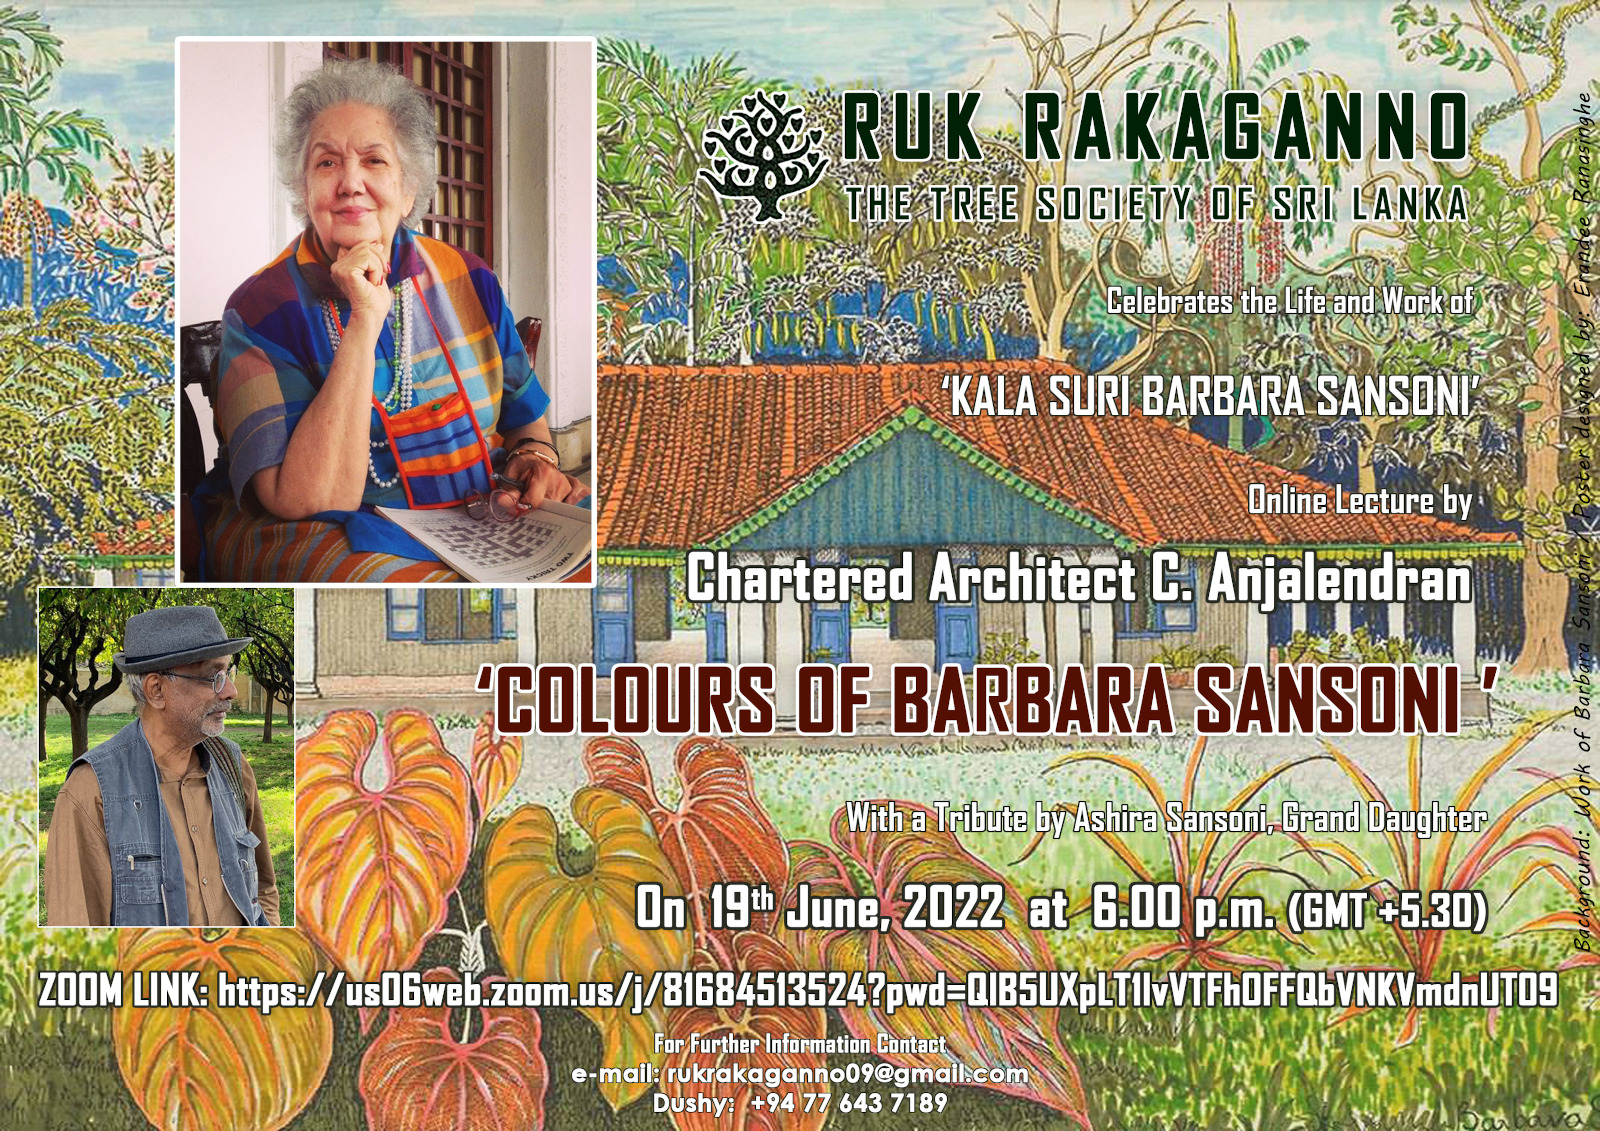 Colours of Barbara Sansoni By C. Anjalendran.